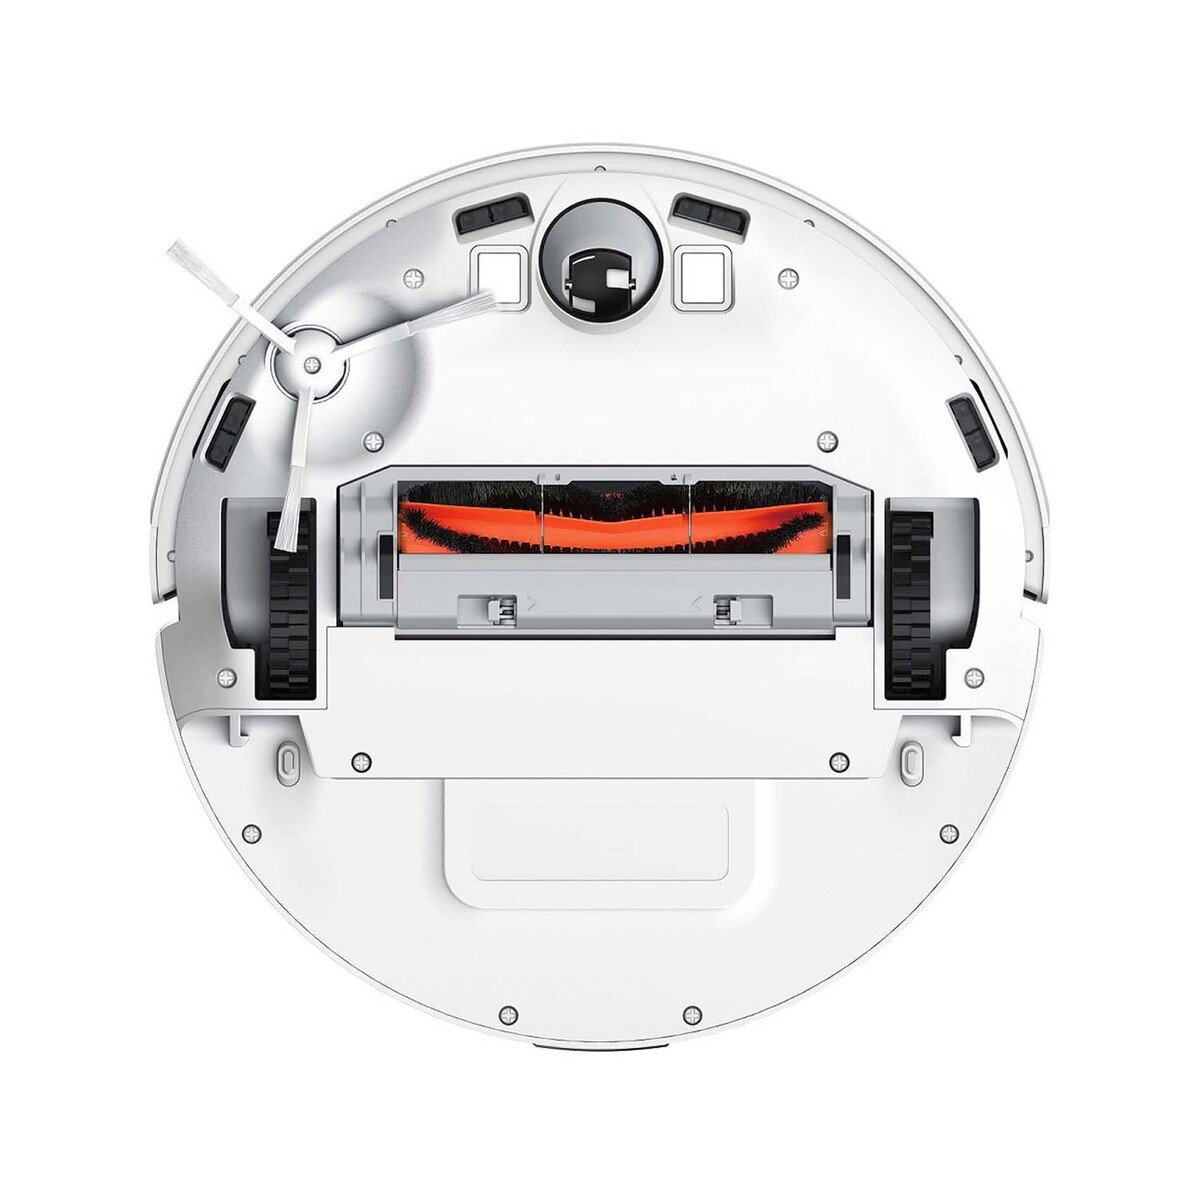 Mi Robot Vacuum-Mop 2 Lite, 2 in 1 Sweeping & Mopping Robotic Vacuum Cleaner, 35 W, 2600 mAh, White, BHR5218EN